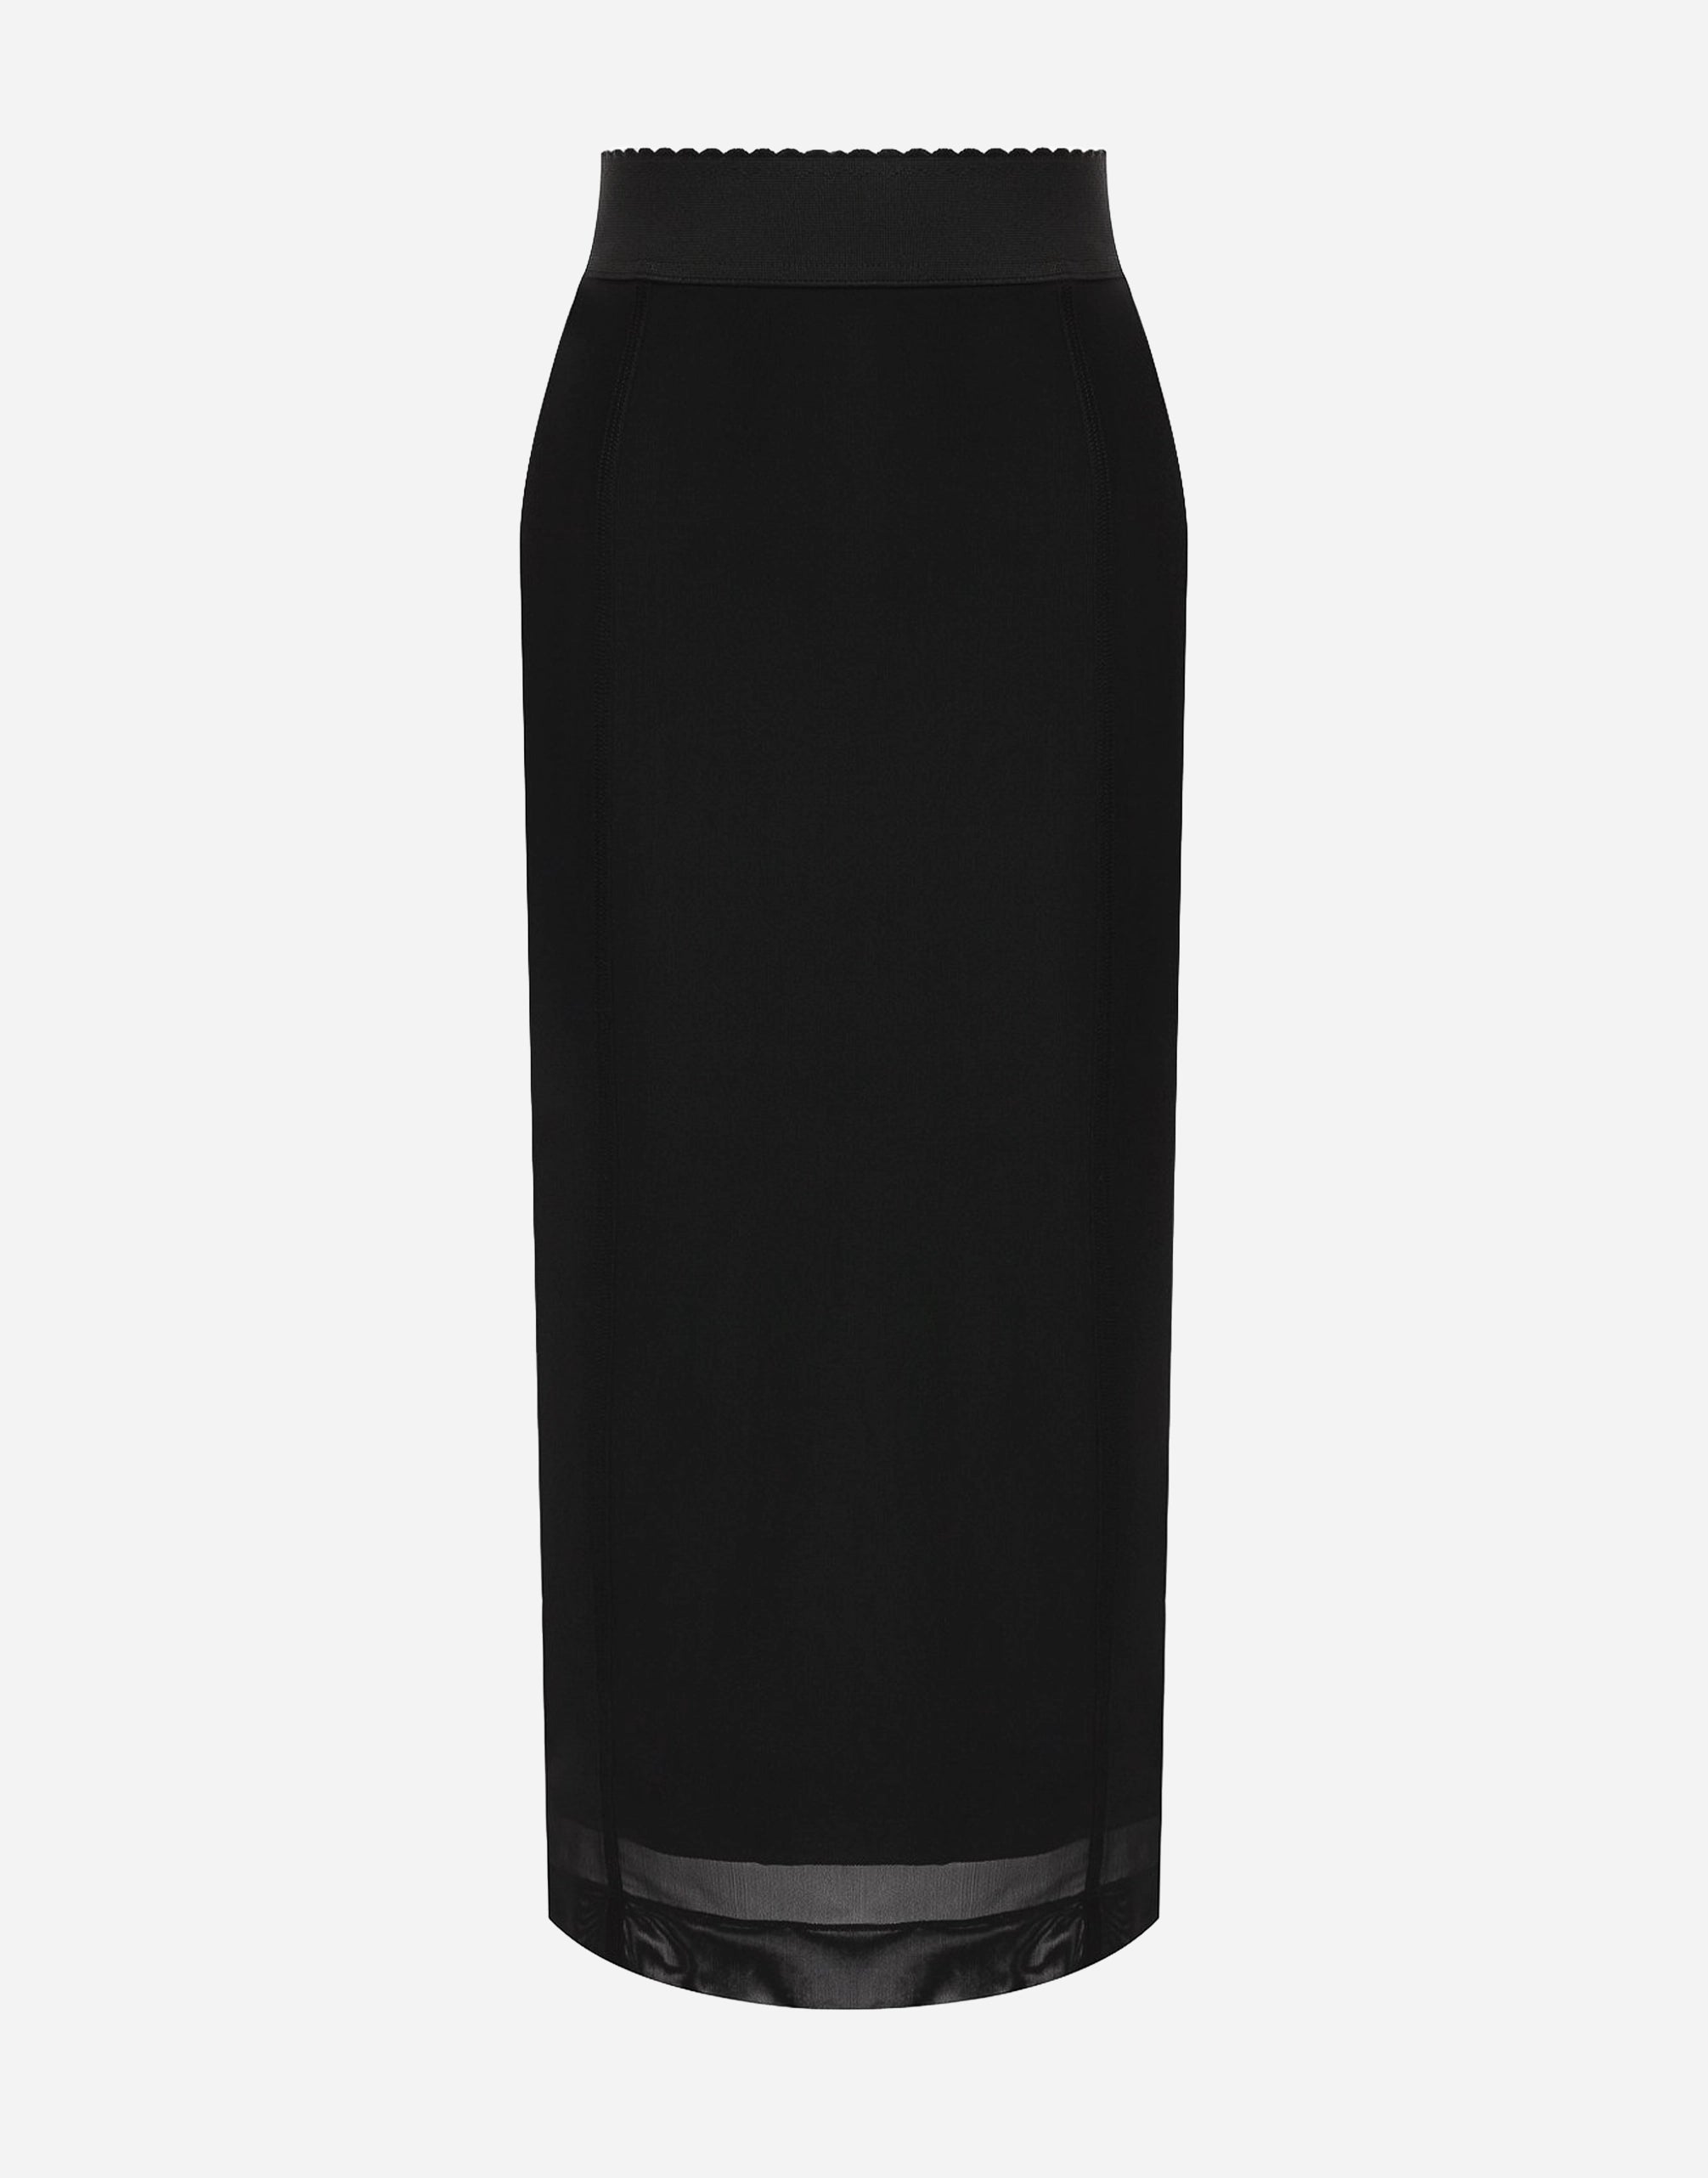 Dolce & Gabbana High-Waisted Pencil Skirt